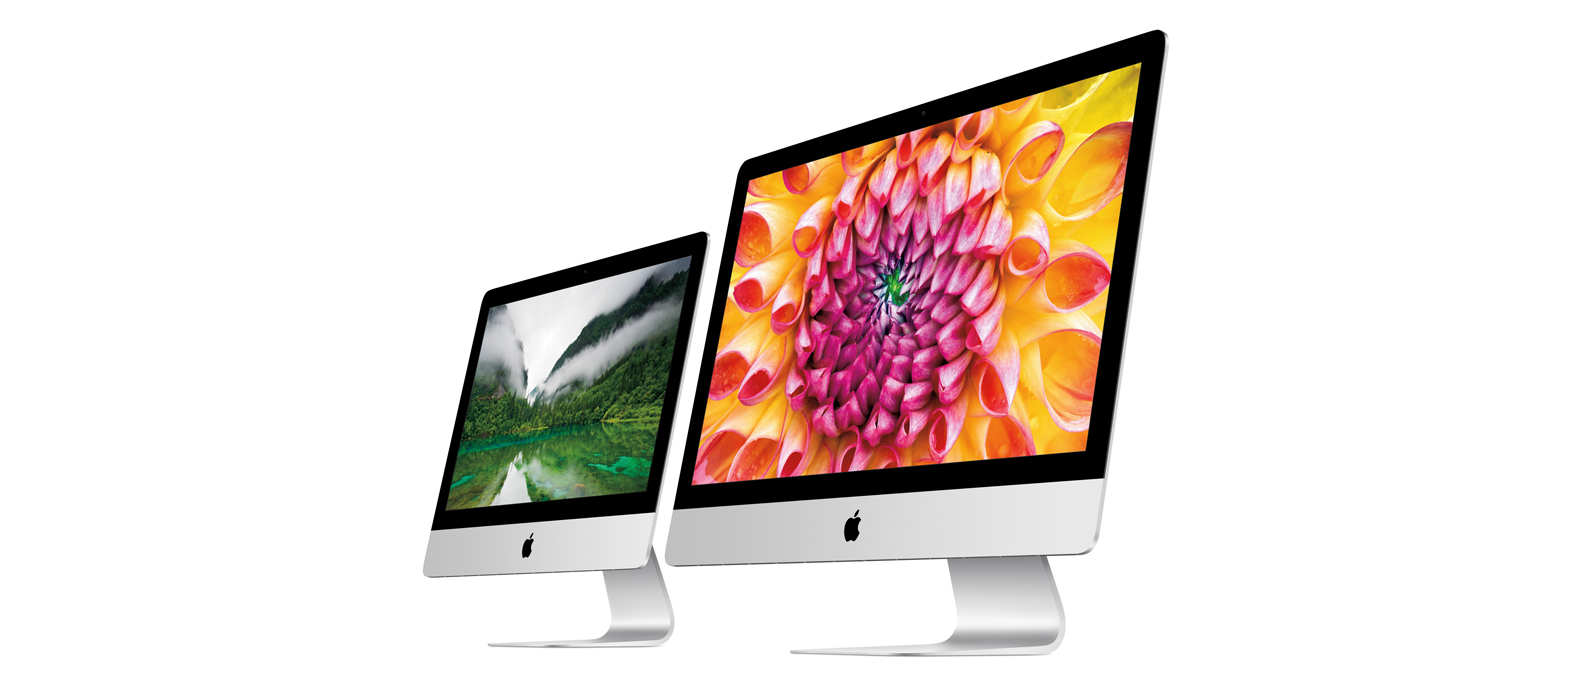 Two iMacs